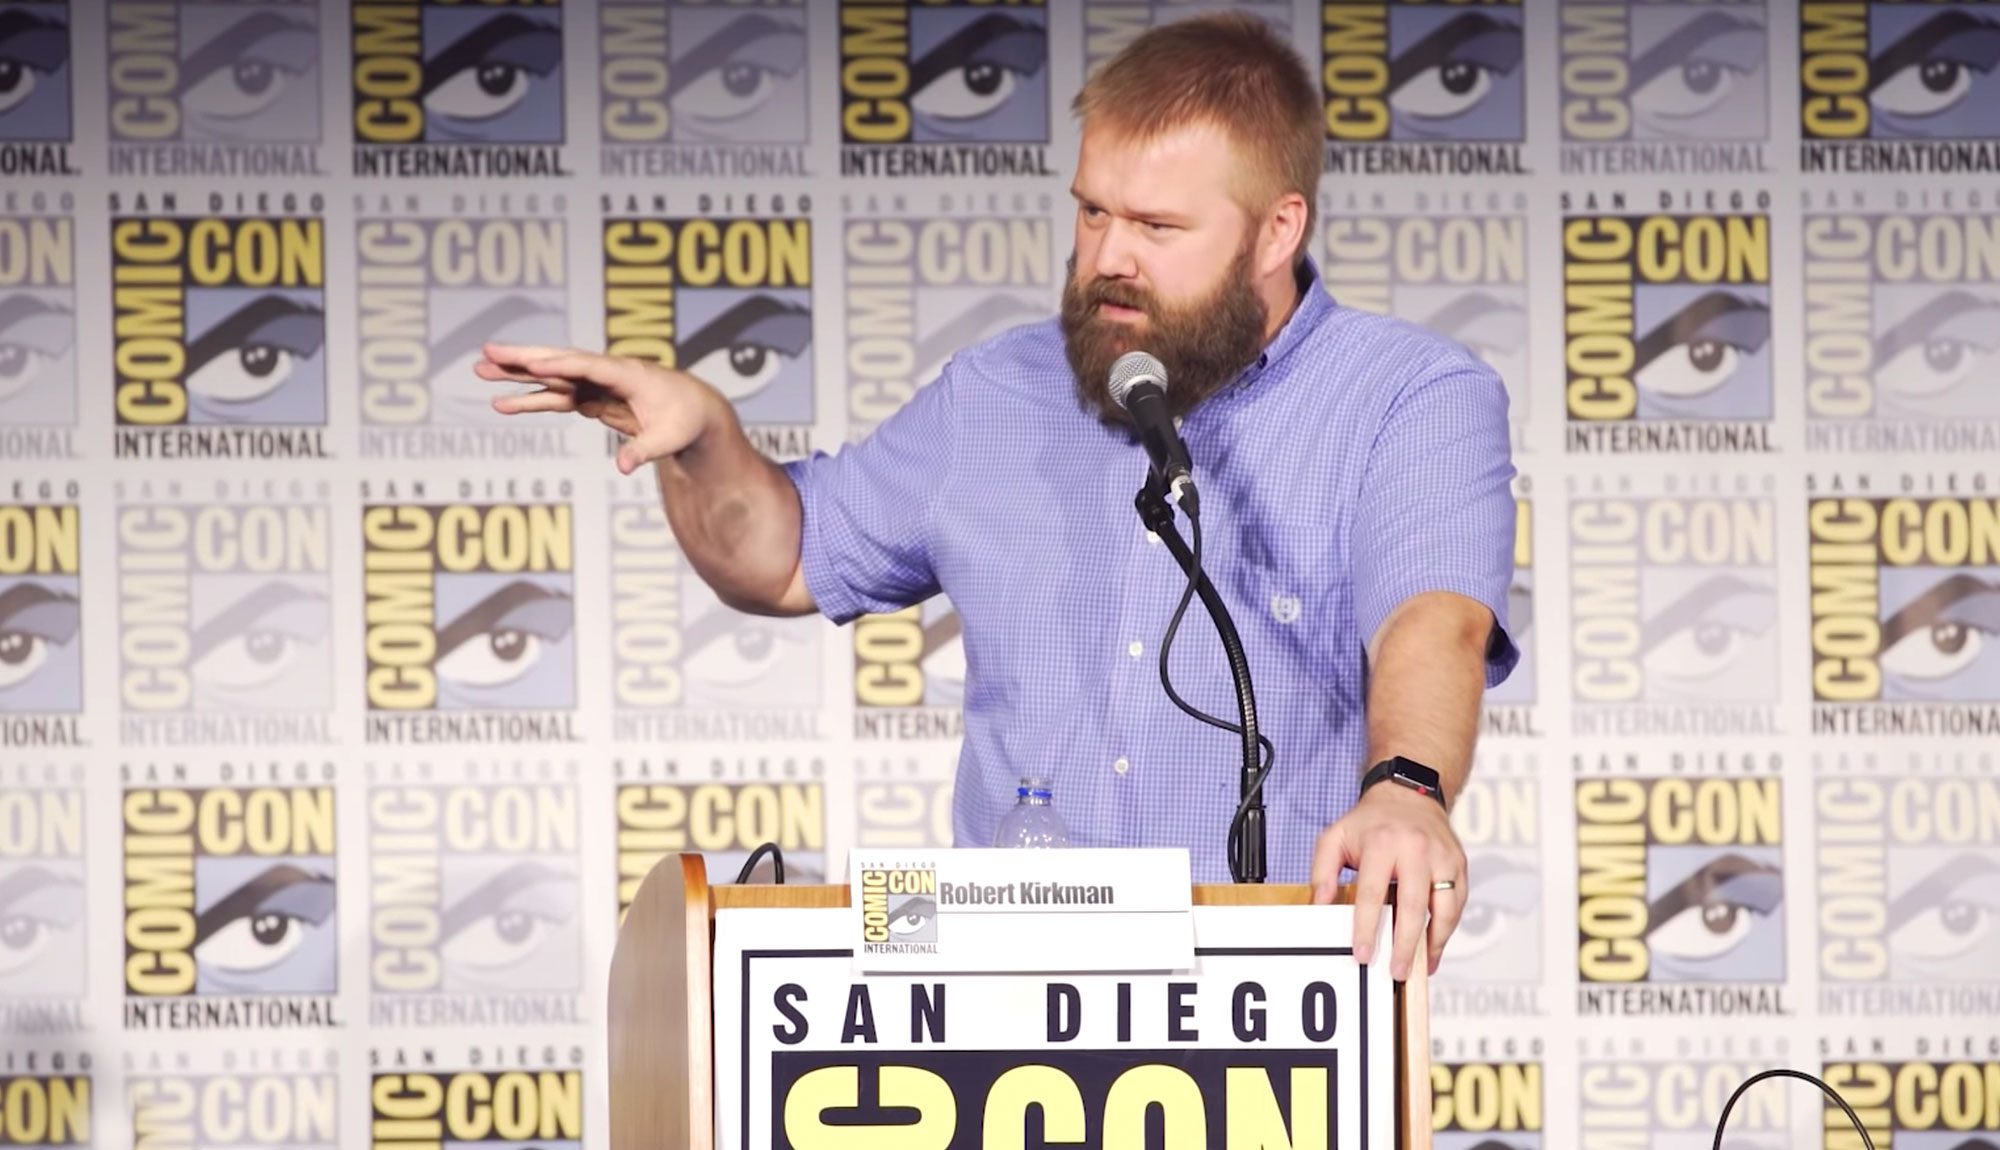 Skybound San Diego Comic Con 2019 Panels Announced!